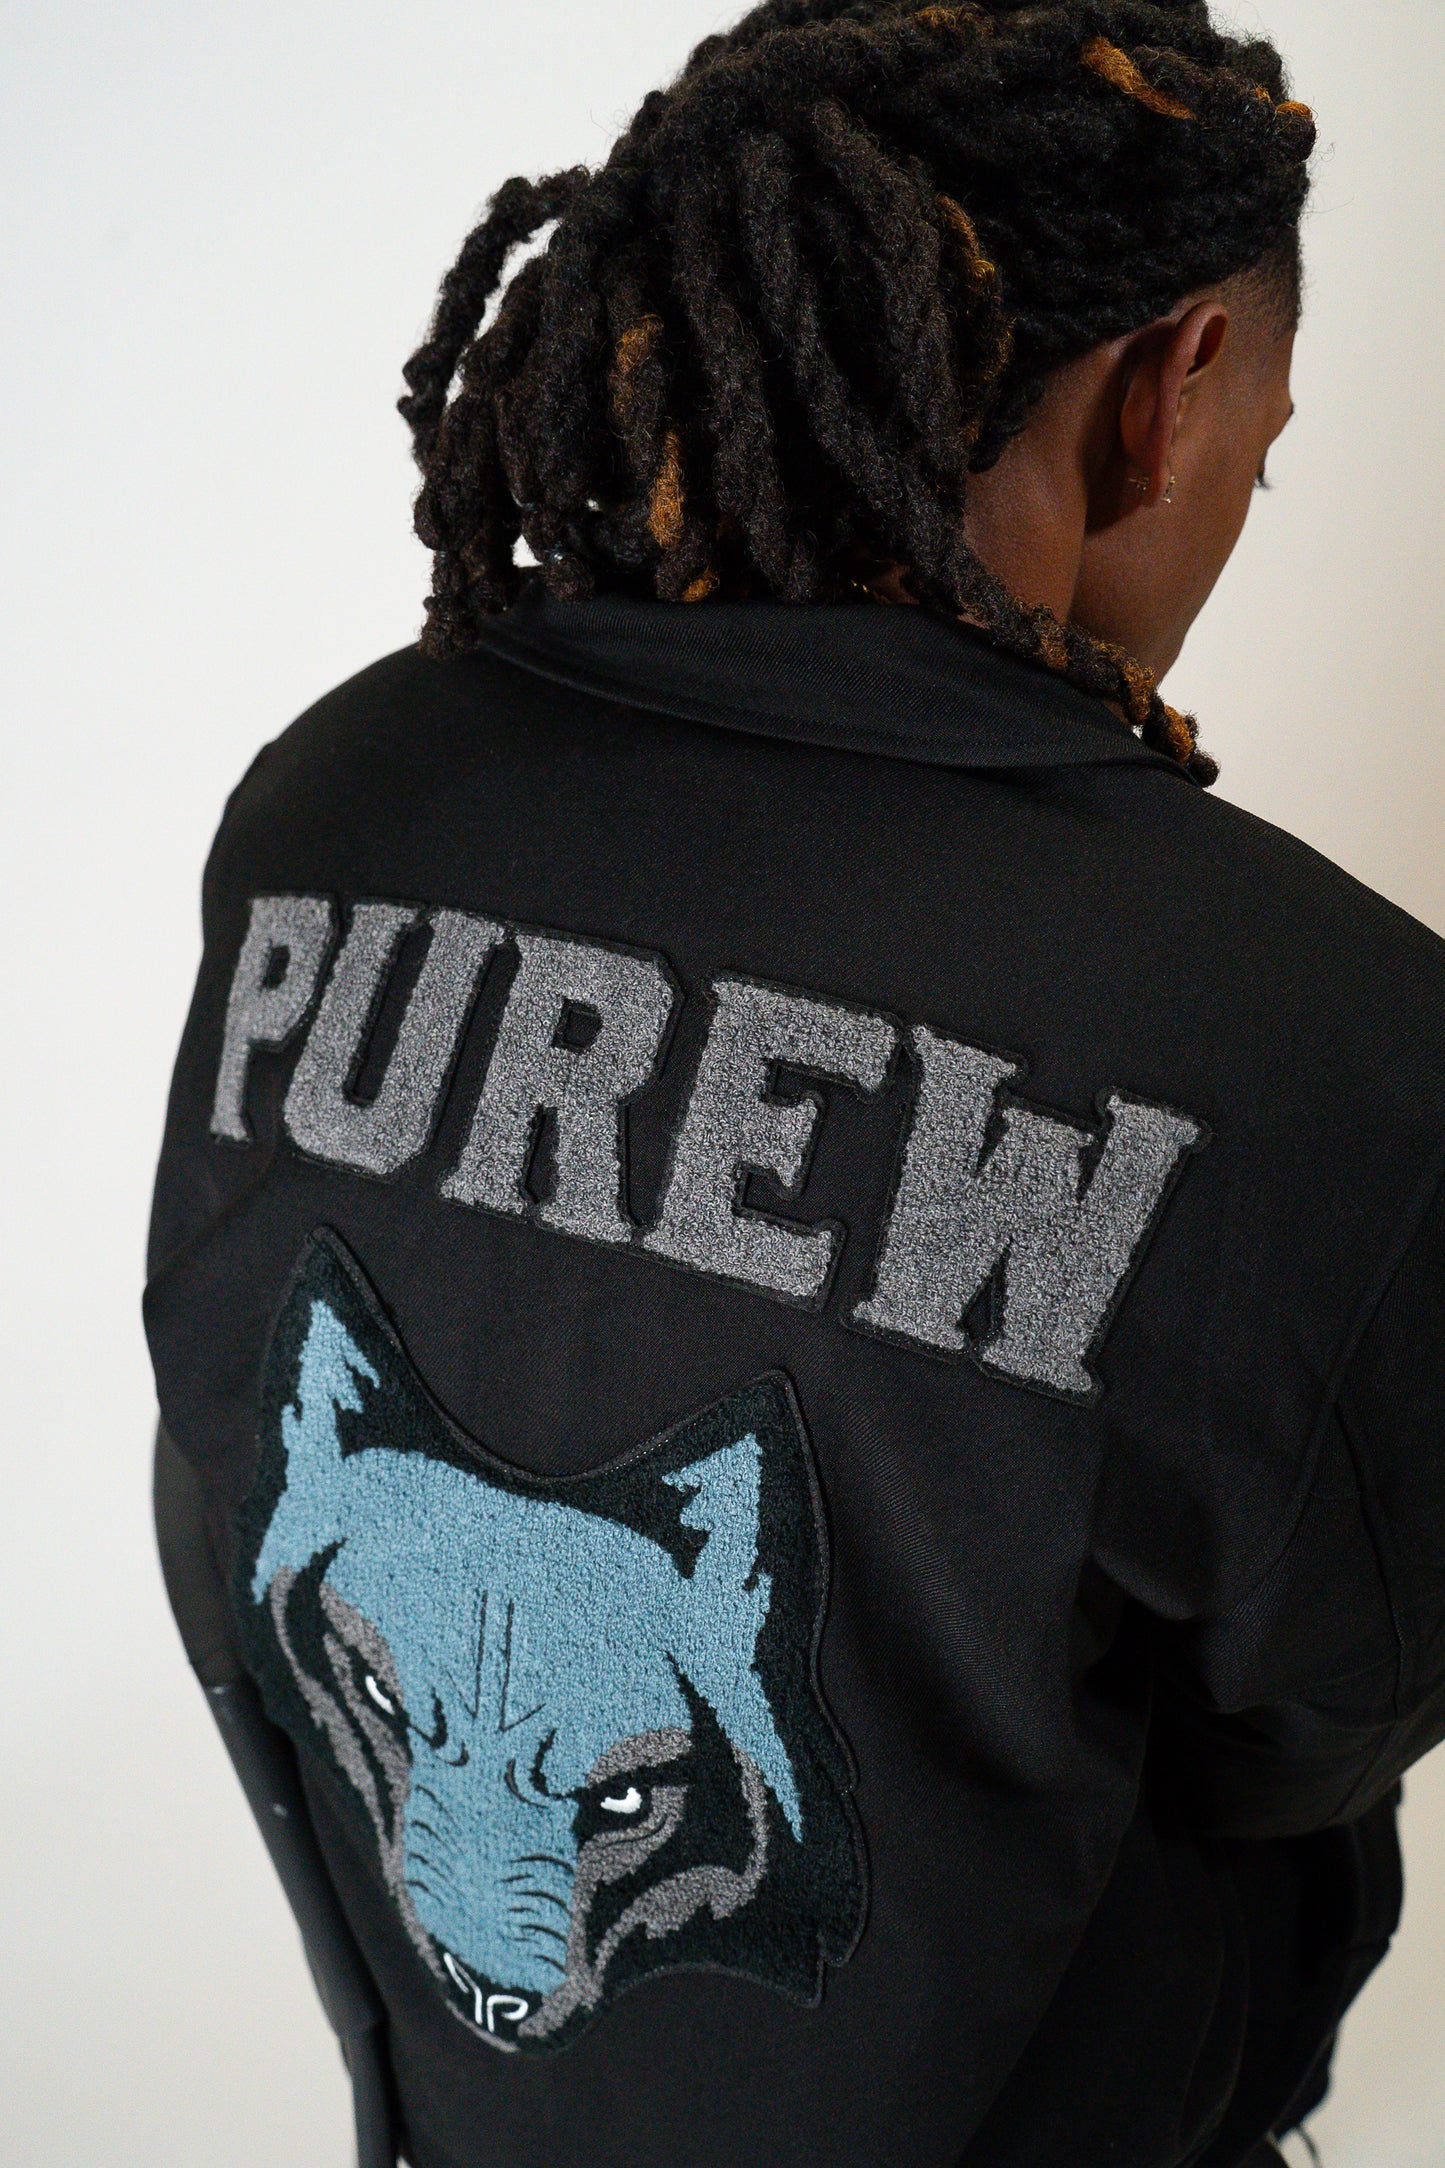 Purew "Lone Wolf Workman" Jacket